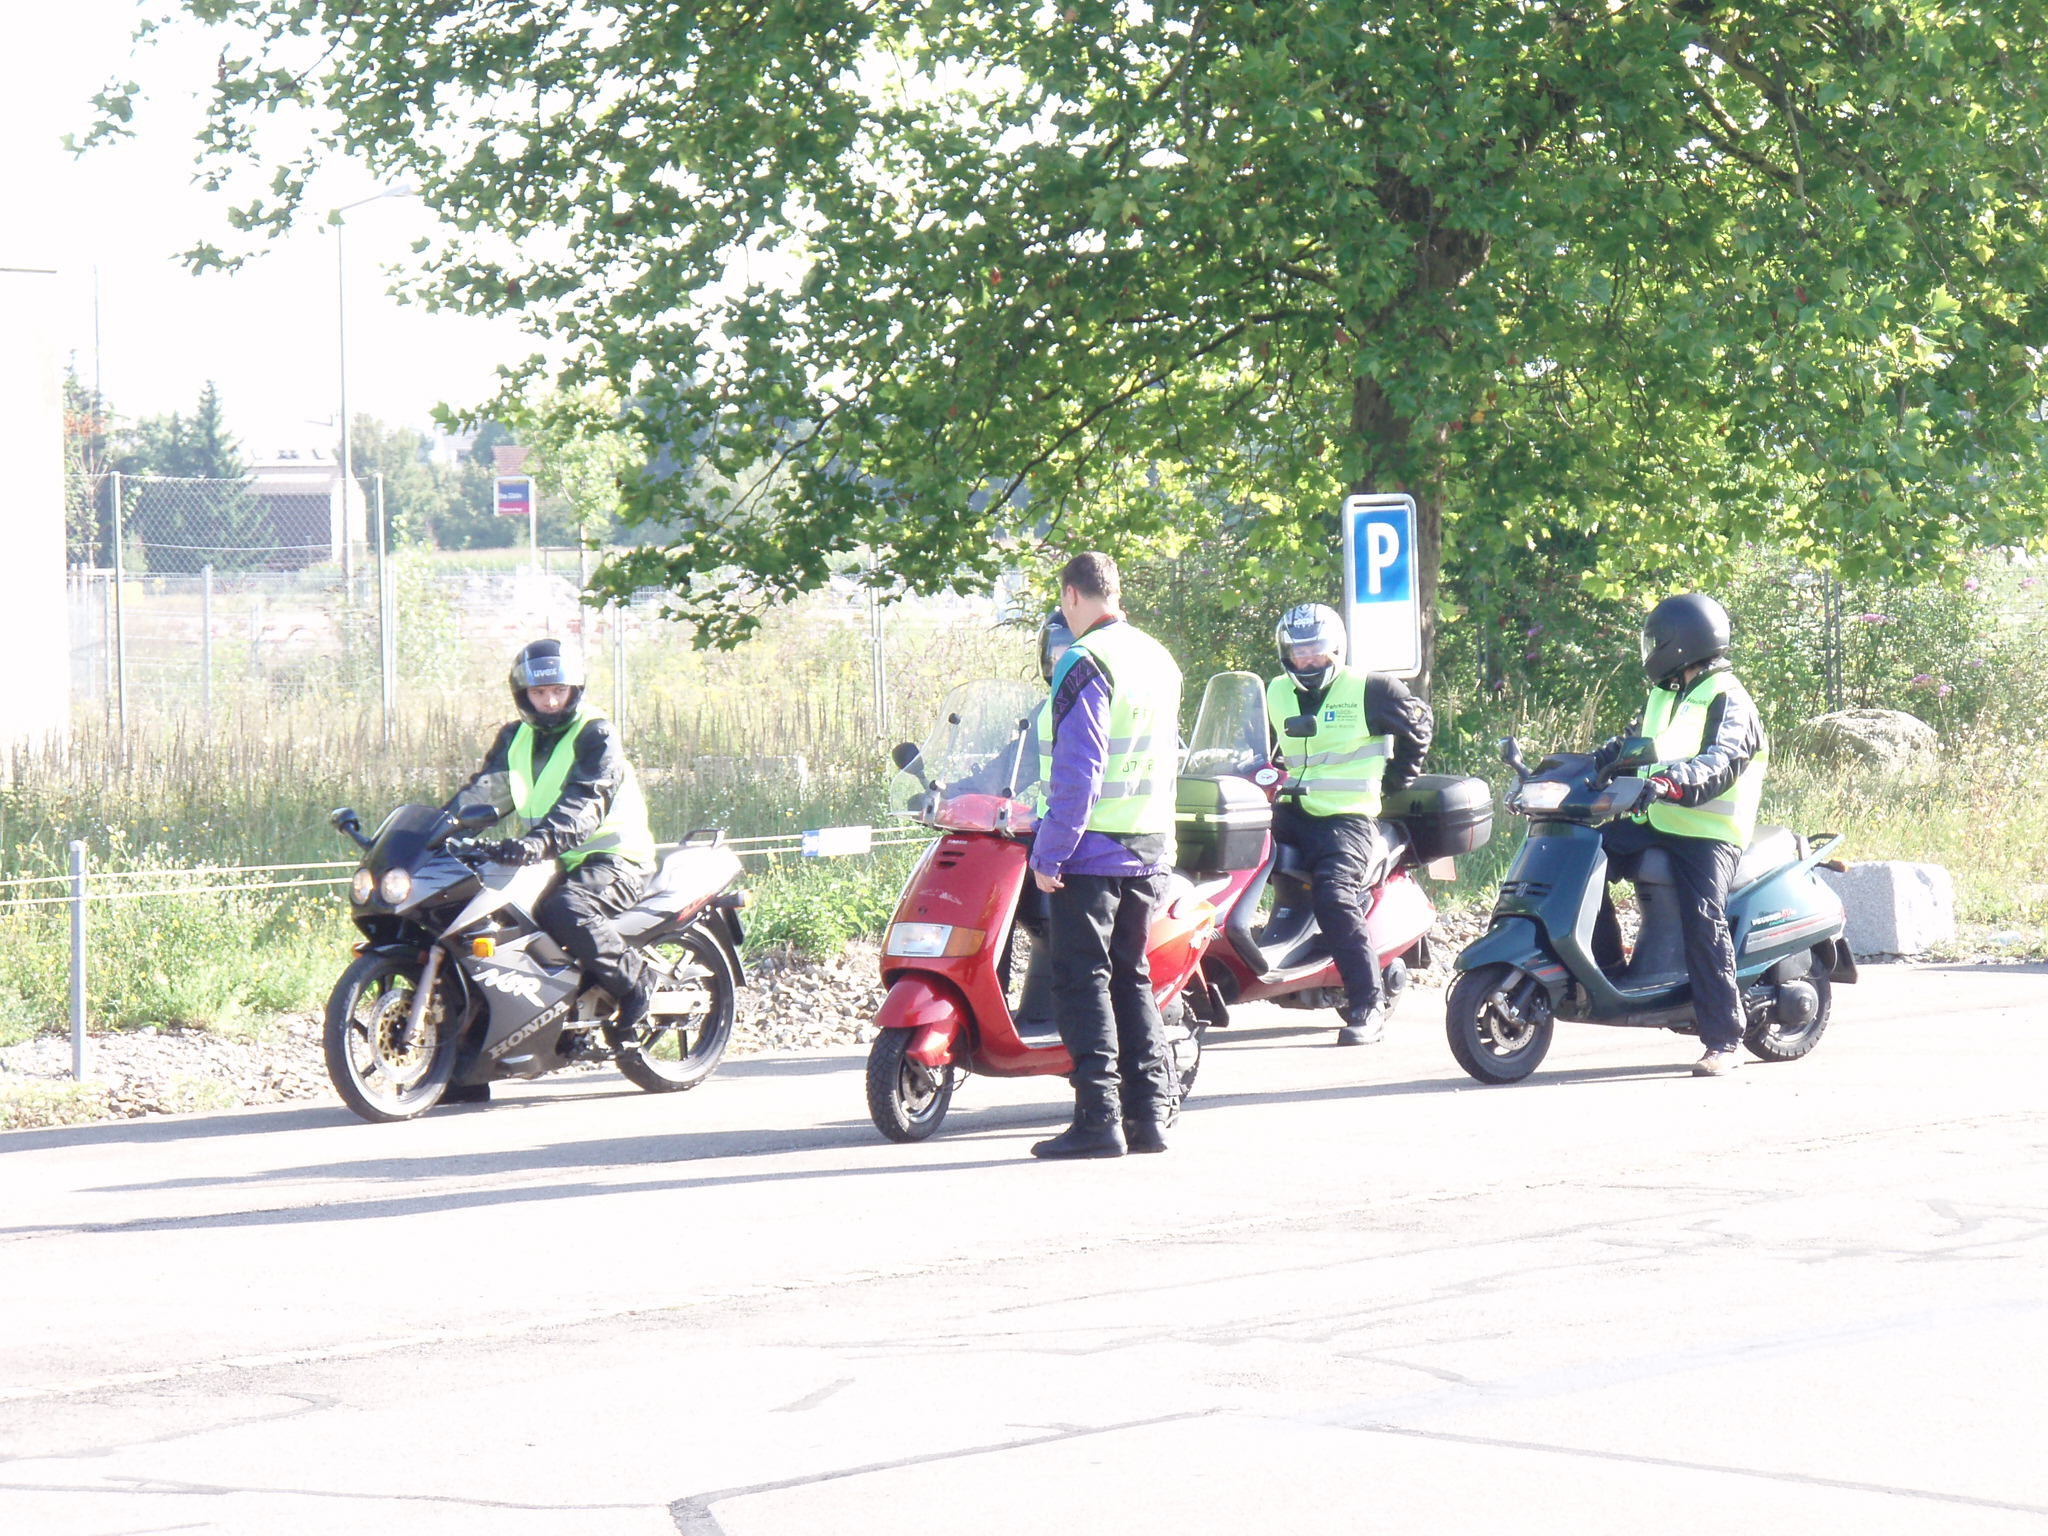 Kategorie A1 obligatorische Grundkurse und Abschränkt Prüfungsvorbereitung  in Winterthur ABCD- Motorradfahrschule aus Winterthur